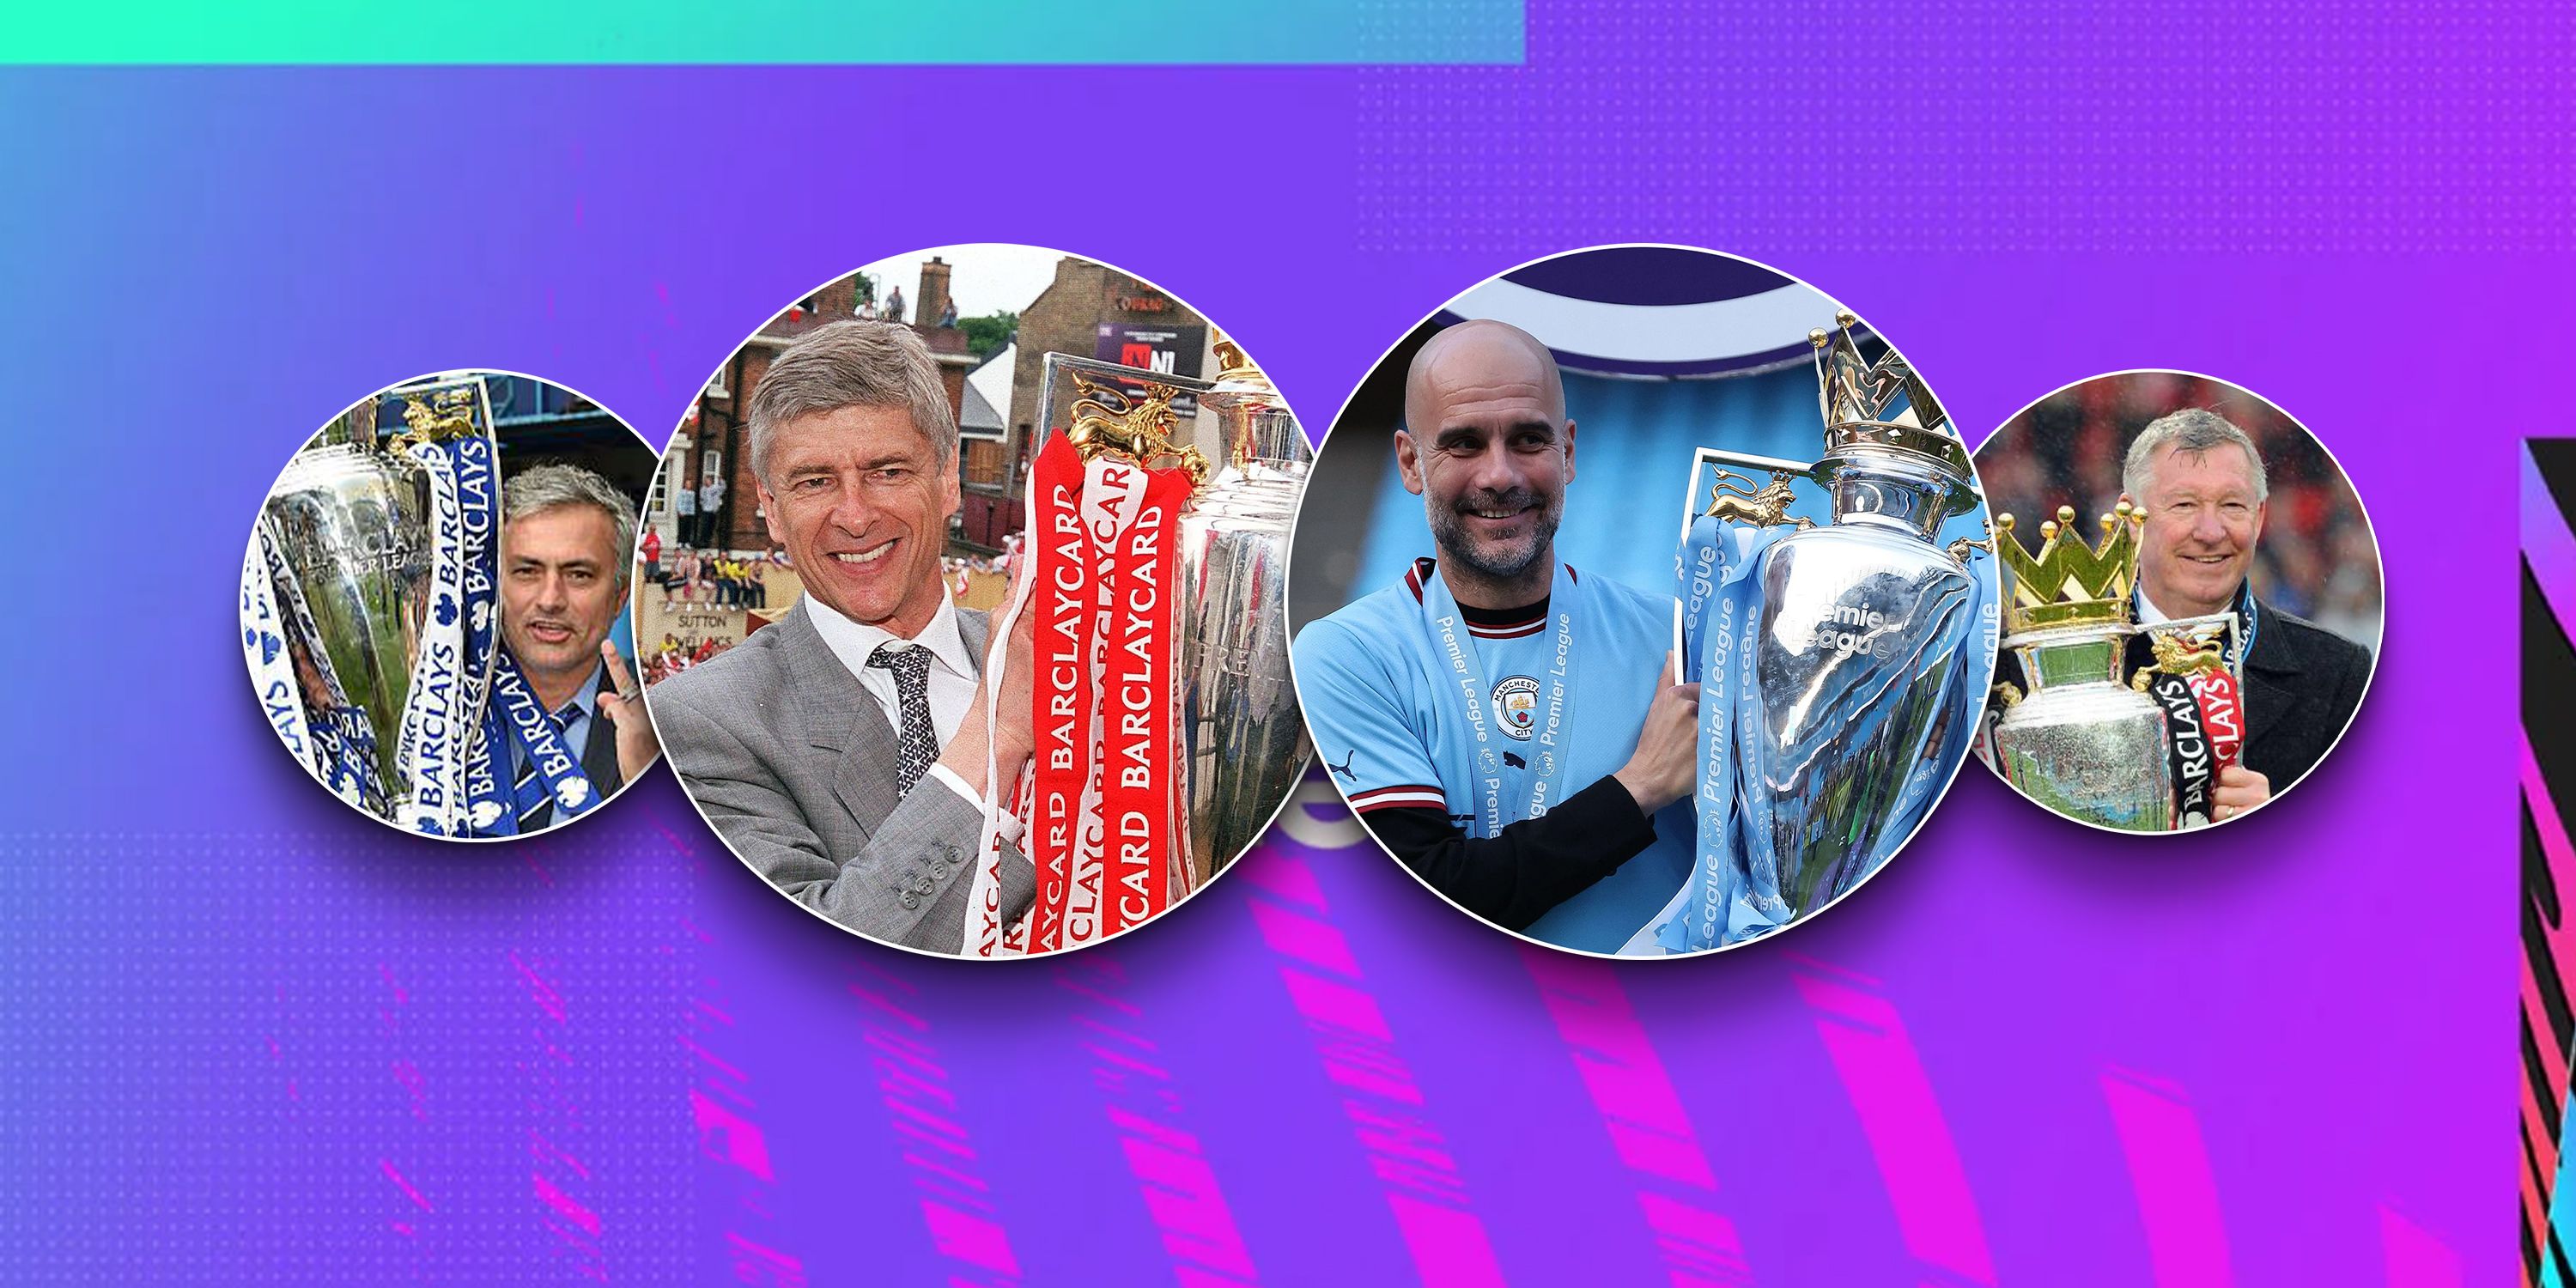 Sir Alex Ferguson, Arsene Wenger, Pep Guardiola, Jose Mourinho all holding Premier League trophy with Premier League theme background 